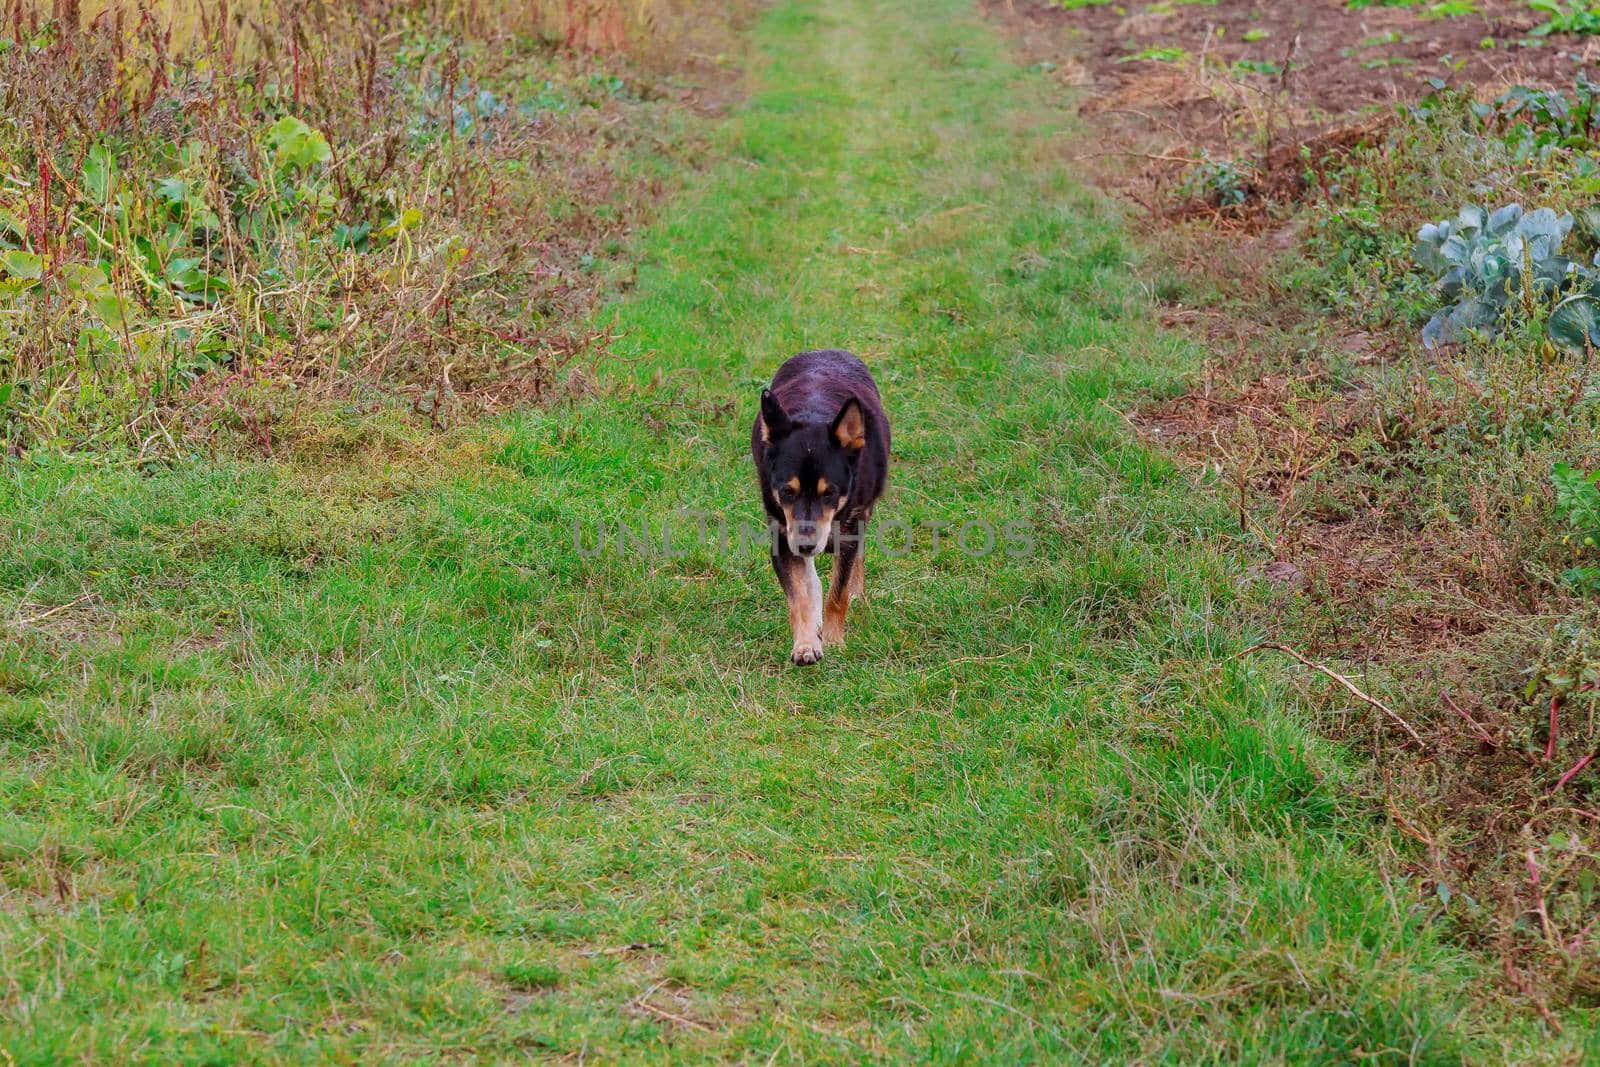 A beautiful dog running in the green grass